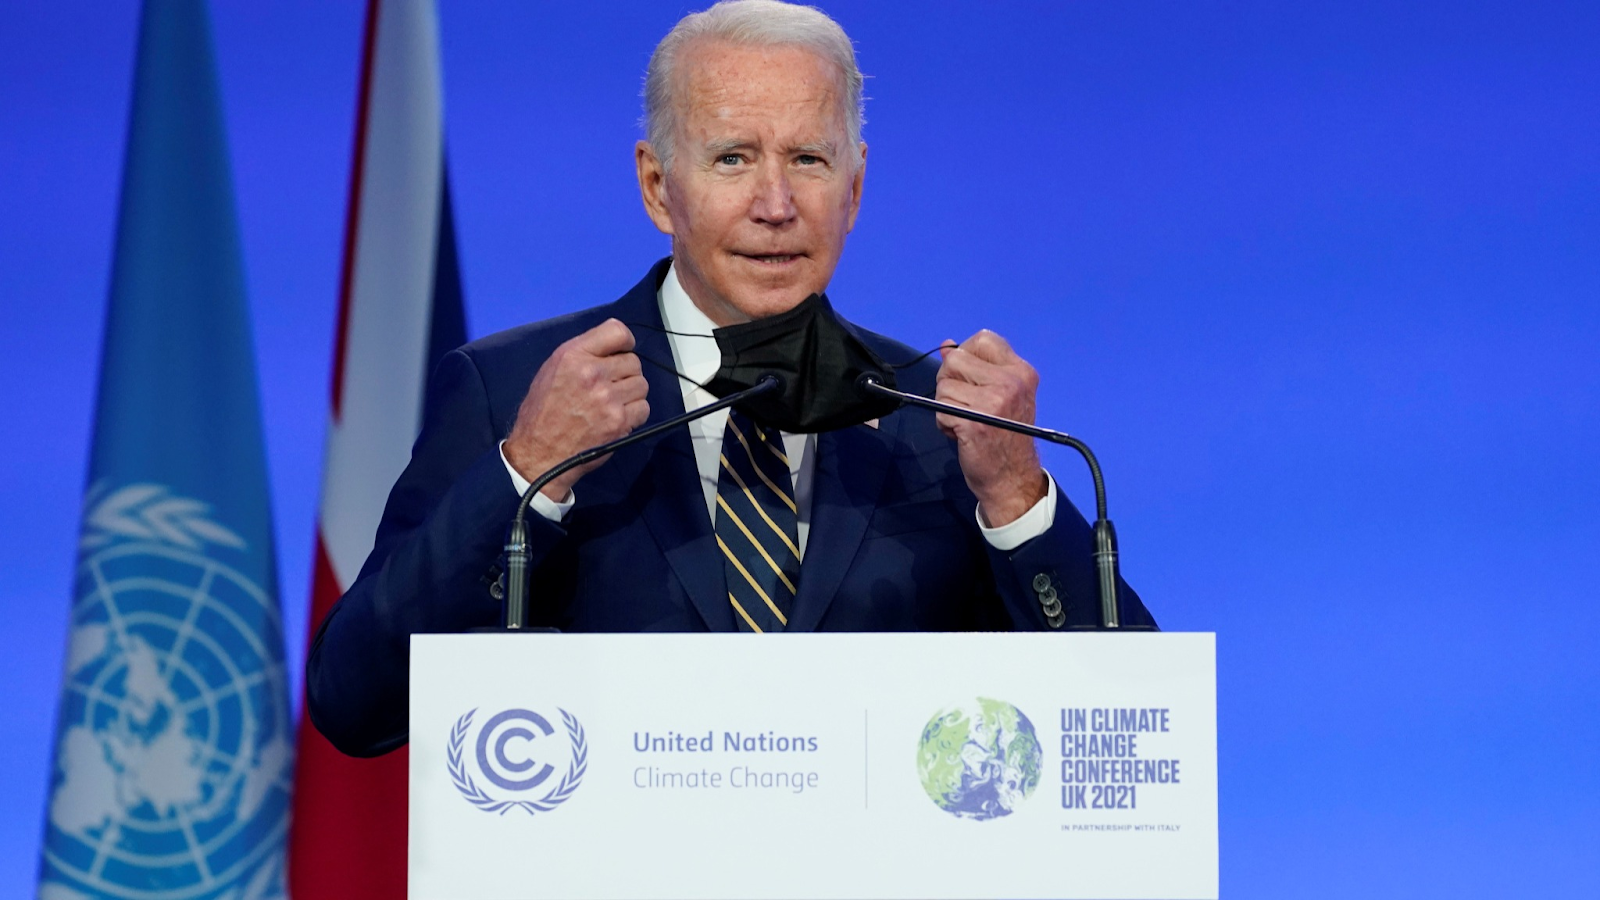 President Biden US global warming policies
